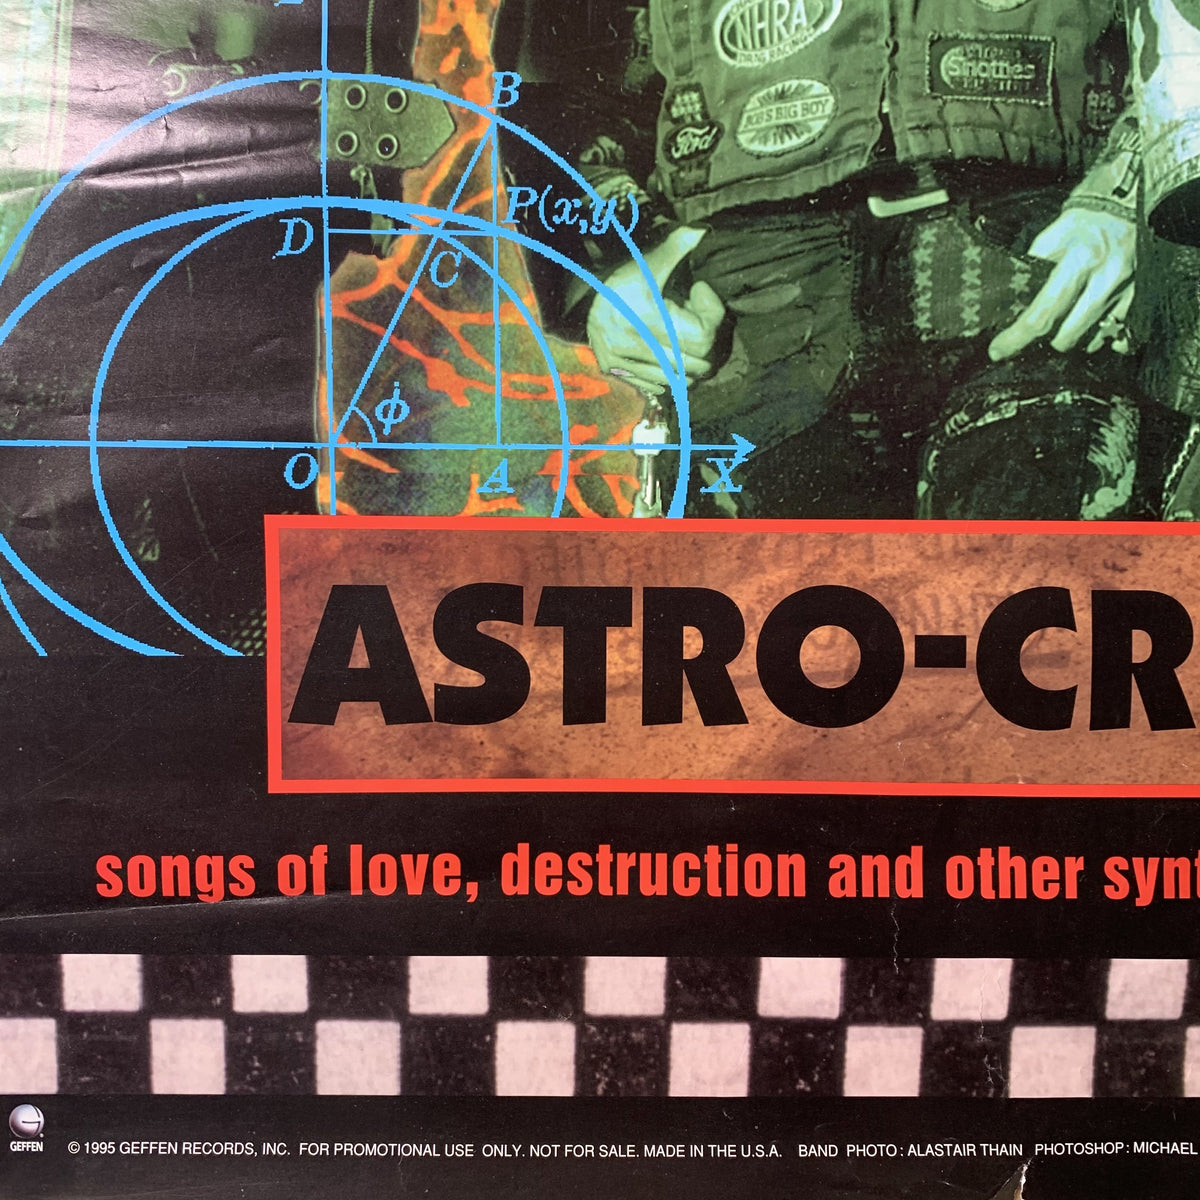 Vintage White Zombie &quot;Astro-Creep: 2000&quot; Geffen Records Promotional Poster